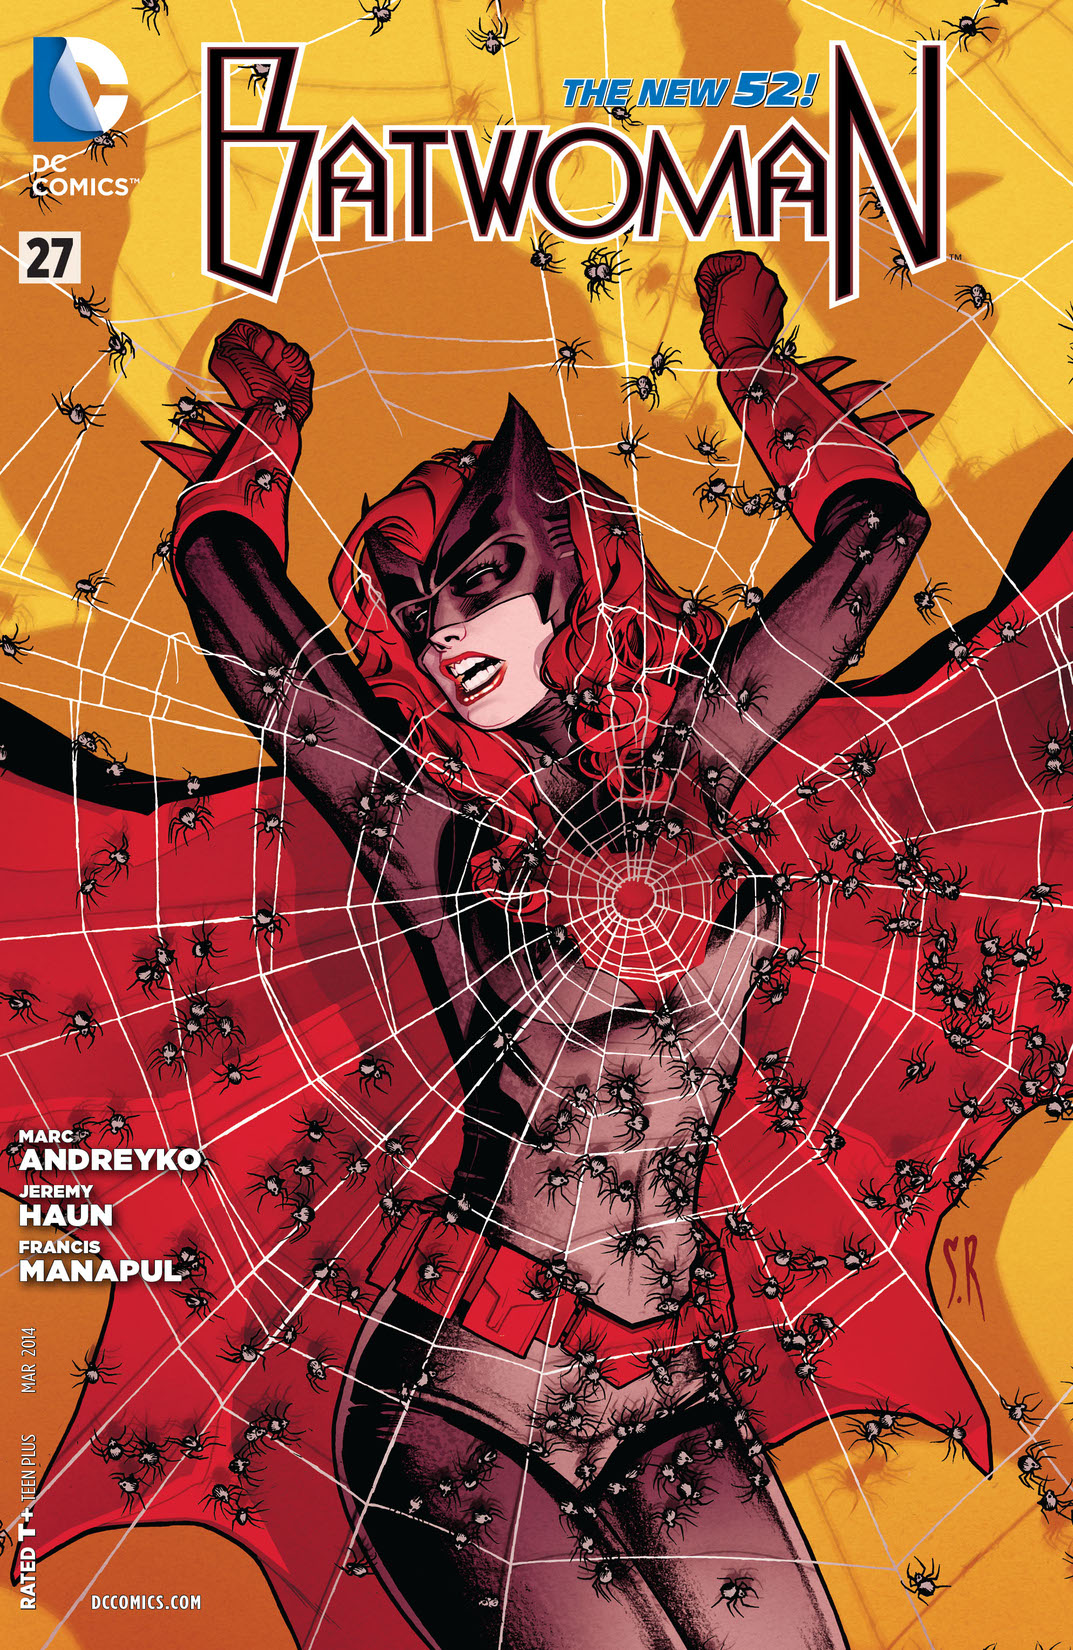 Batwoman (2011-) #27 preview images